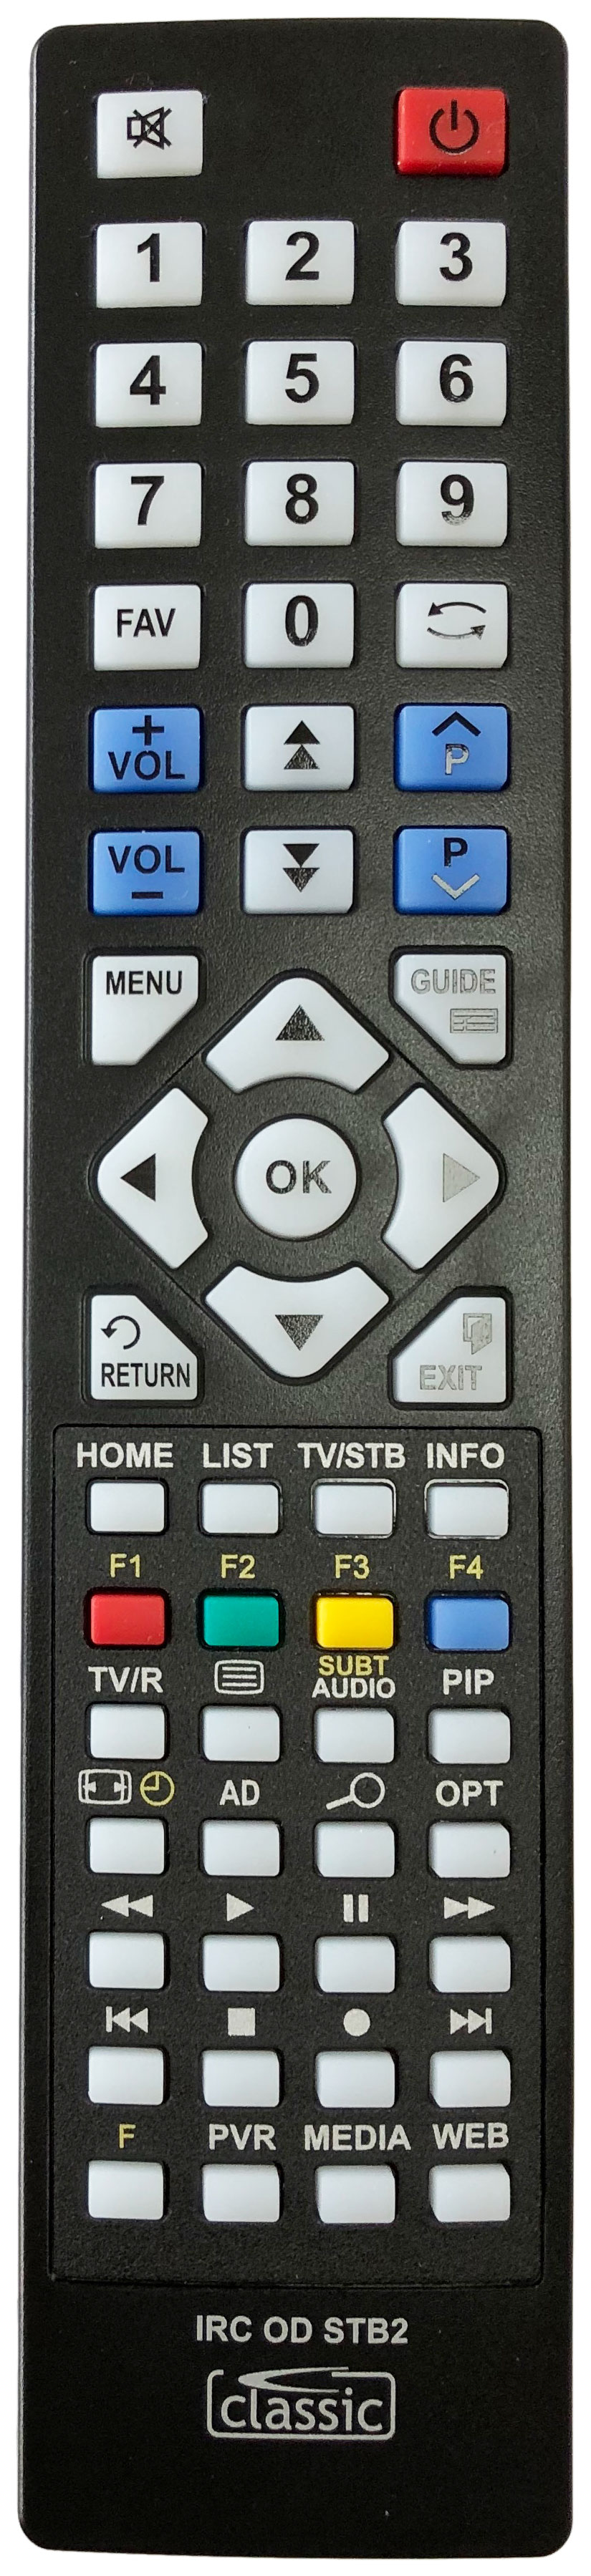 Finlux RC2712 Remote Control Alternative